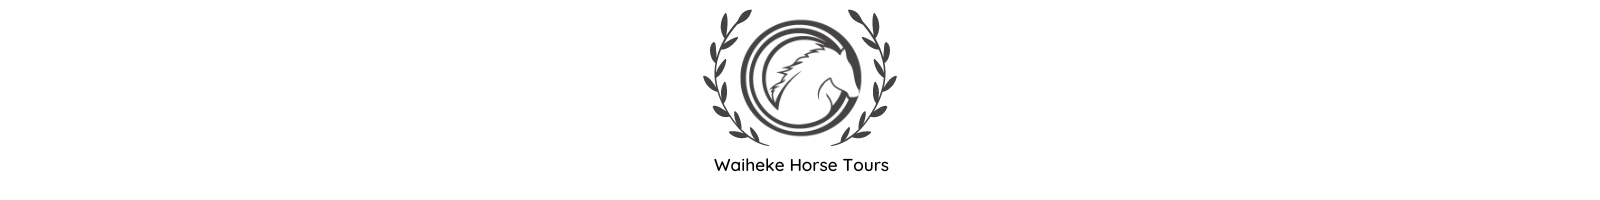 Waiheke Horse Tours